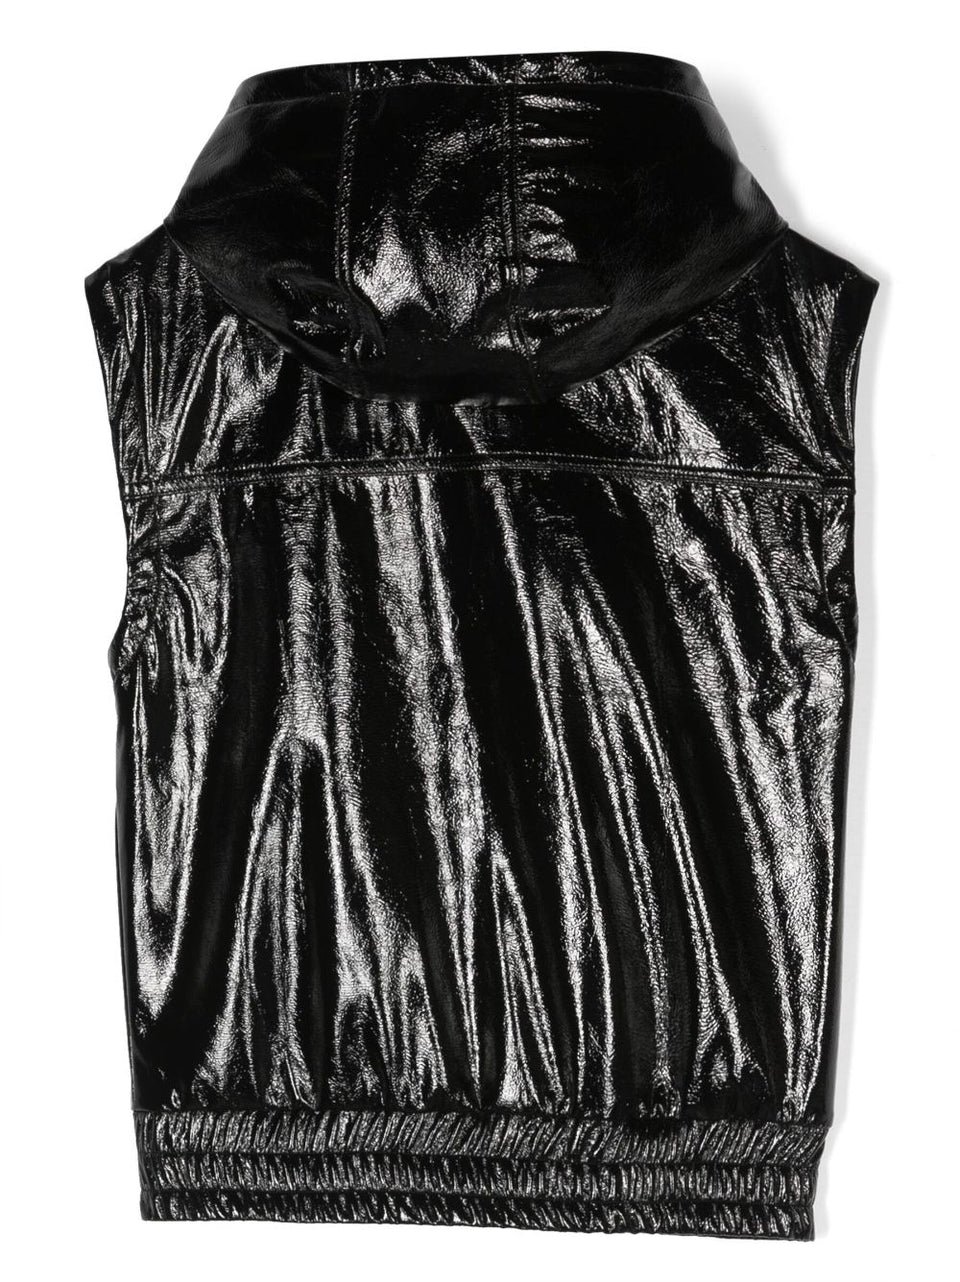 DKNY Reversible Vest size down